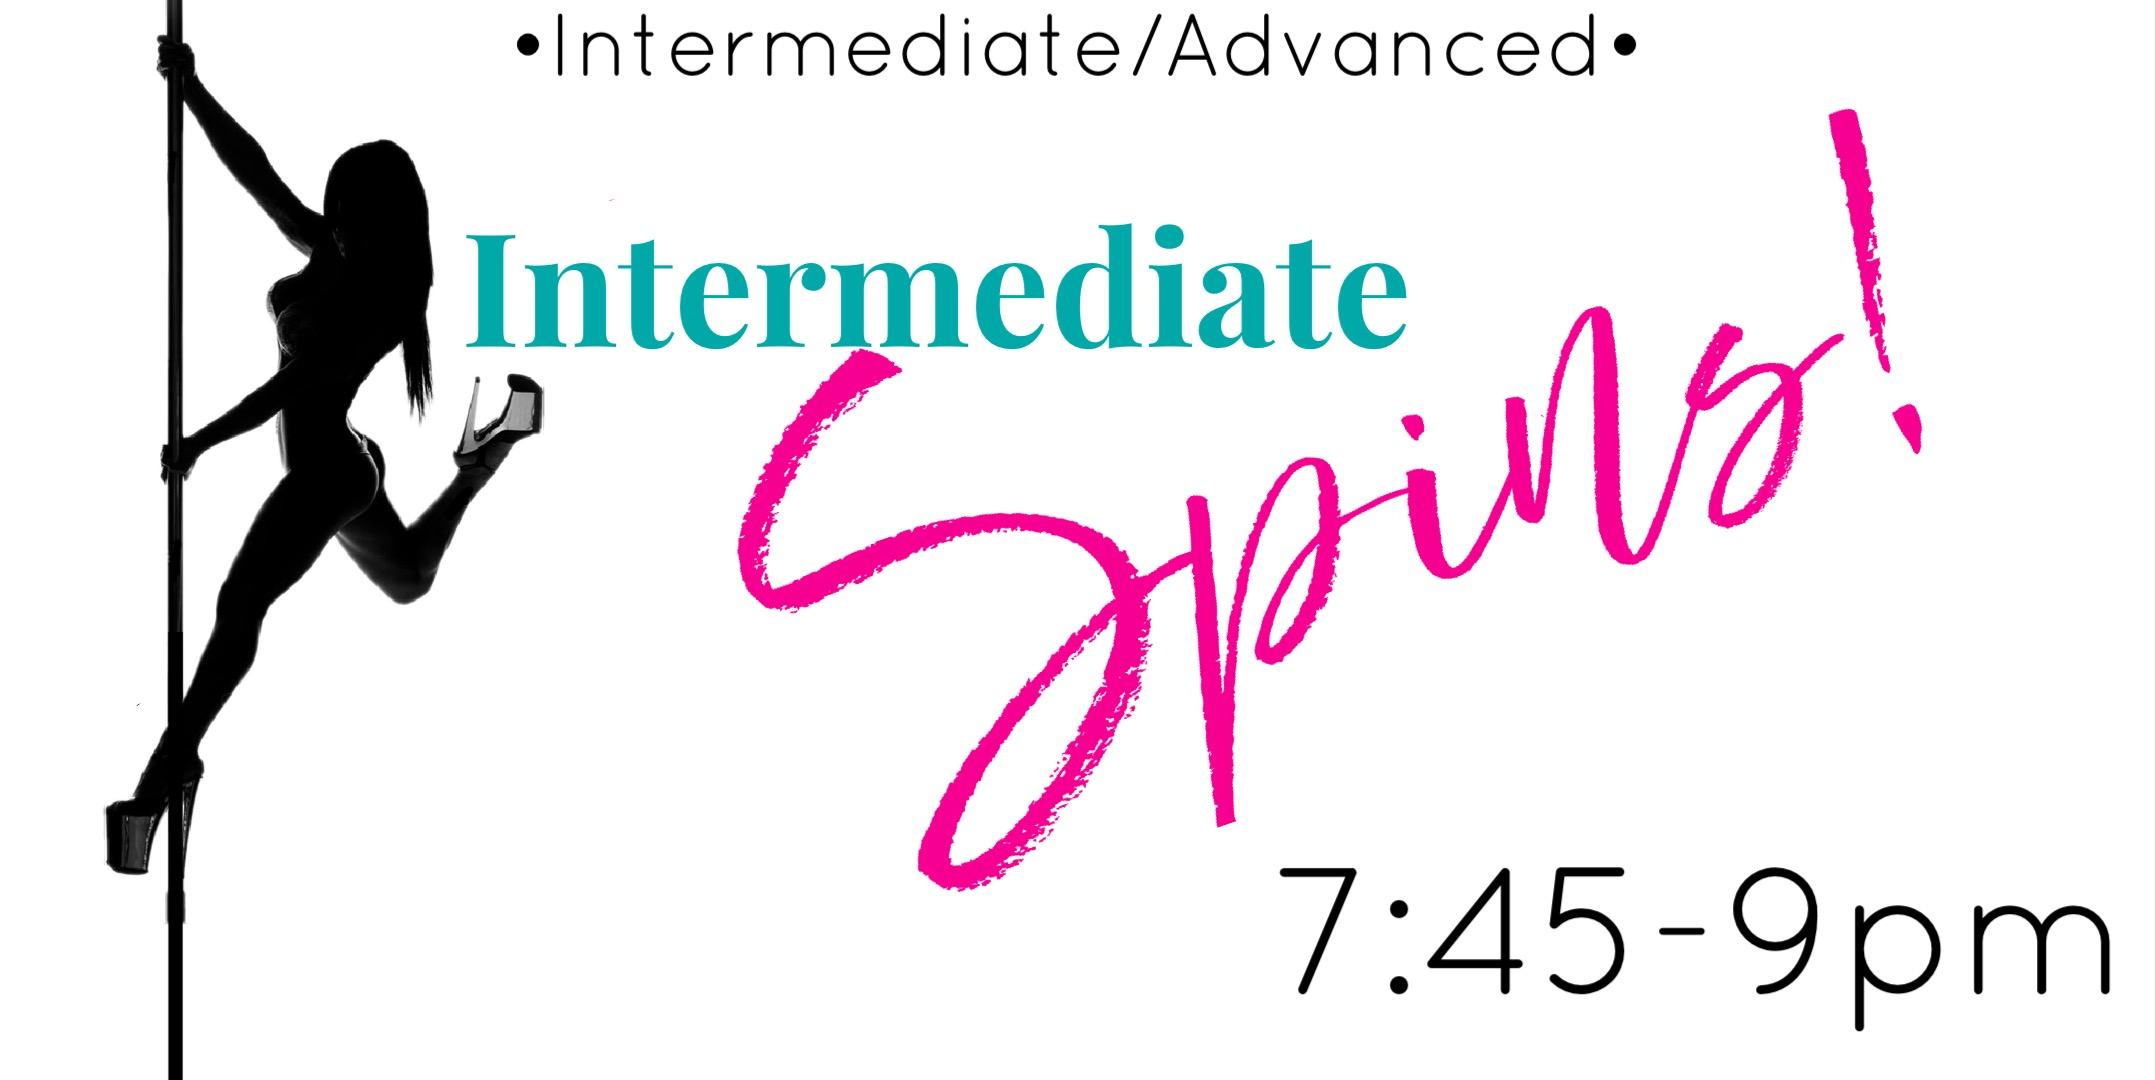 Monday 12/16 -- Intermediate/advanced 7:45 - 9:00pm